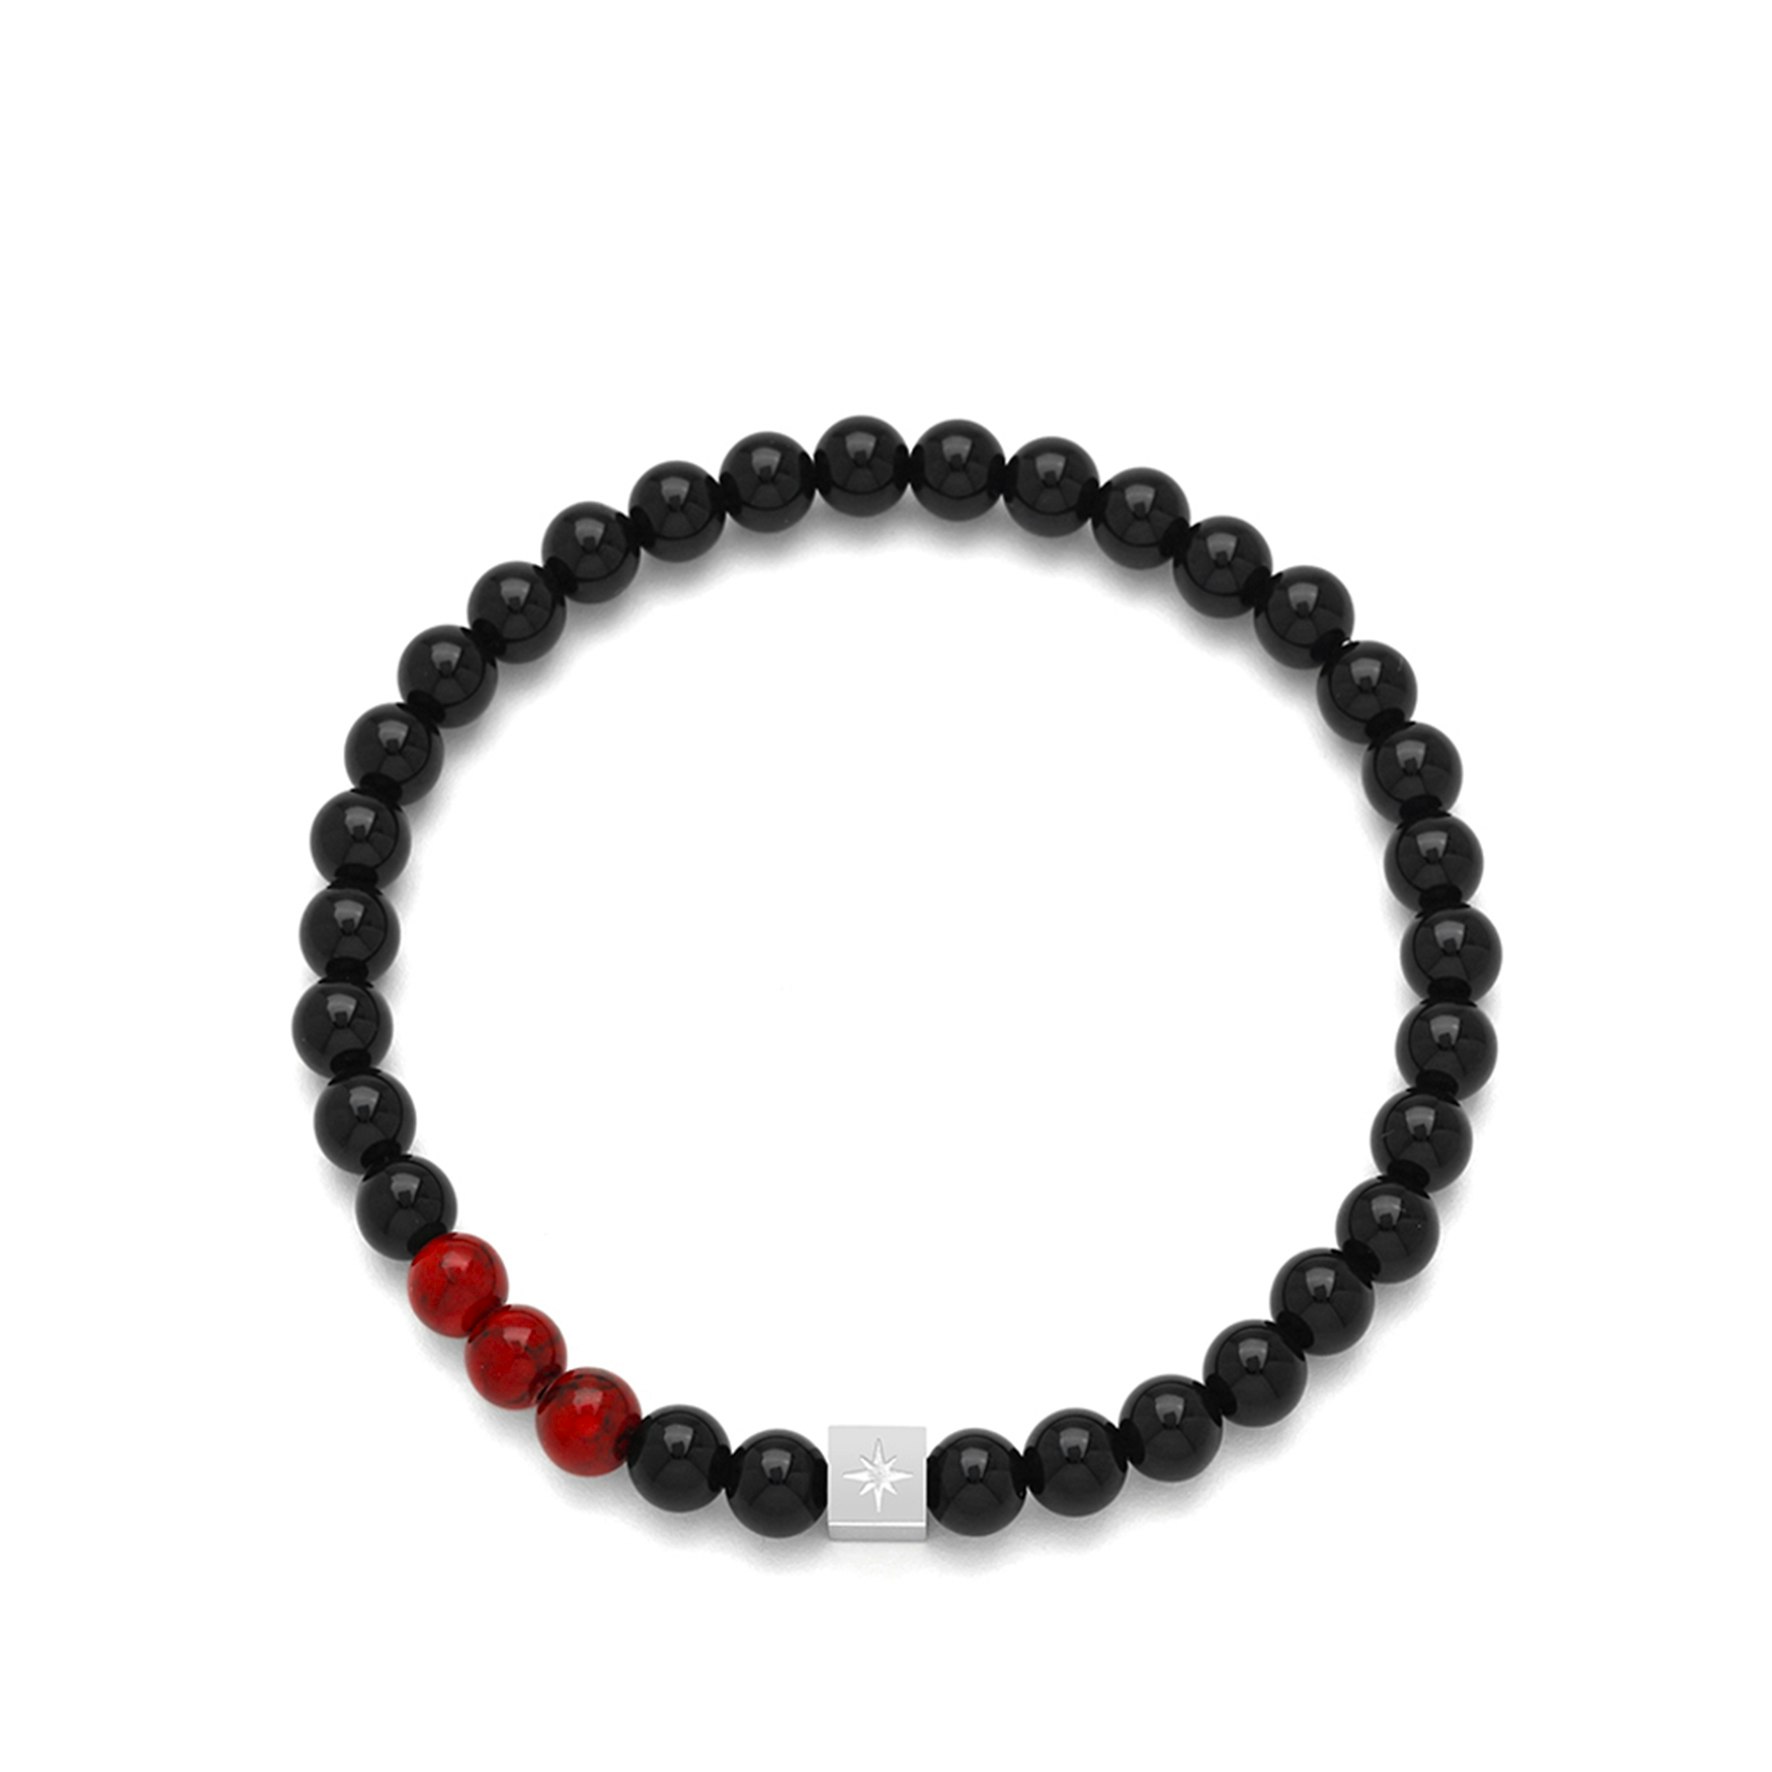 Loui Red and Black Bracelet